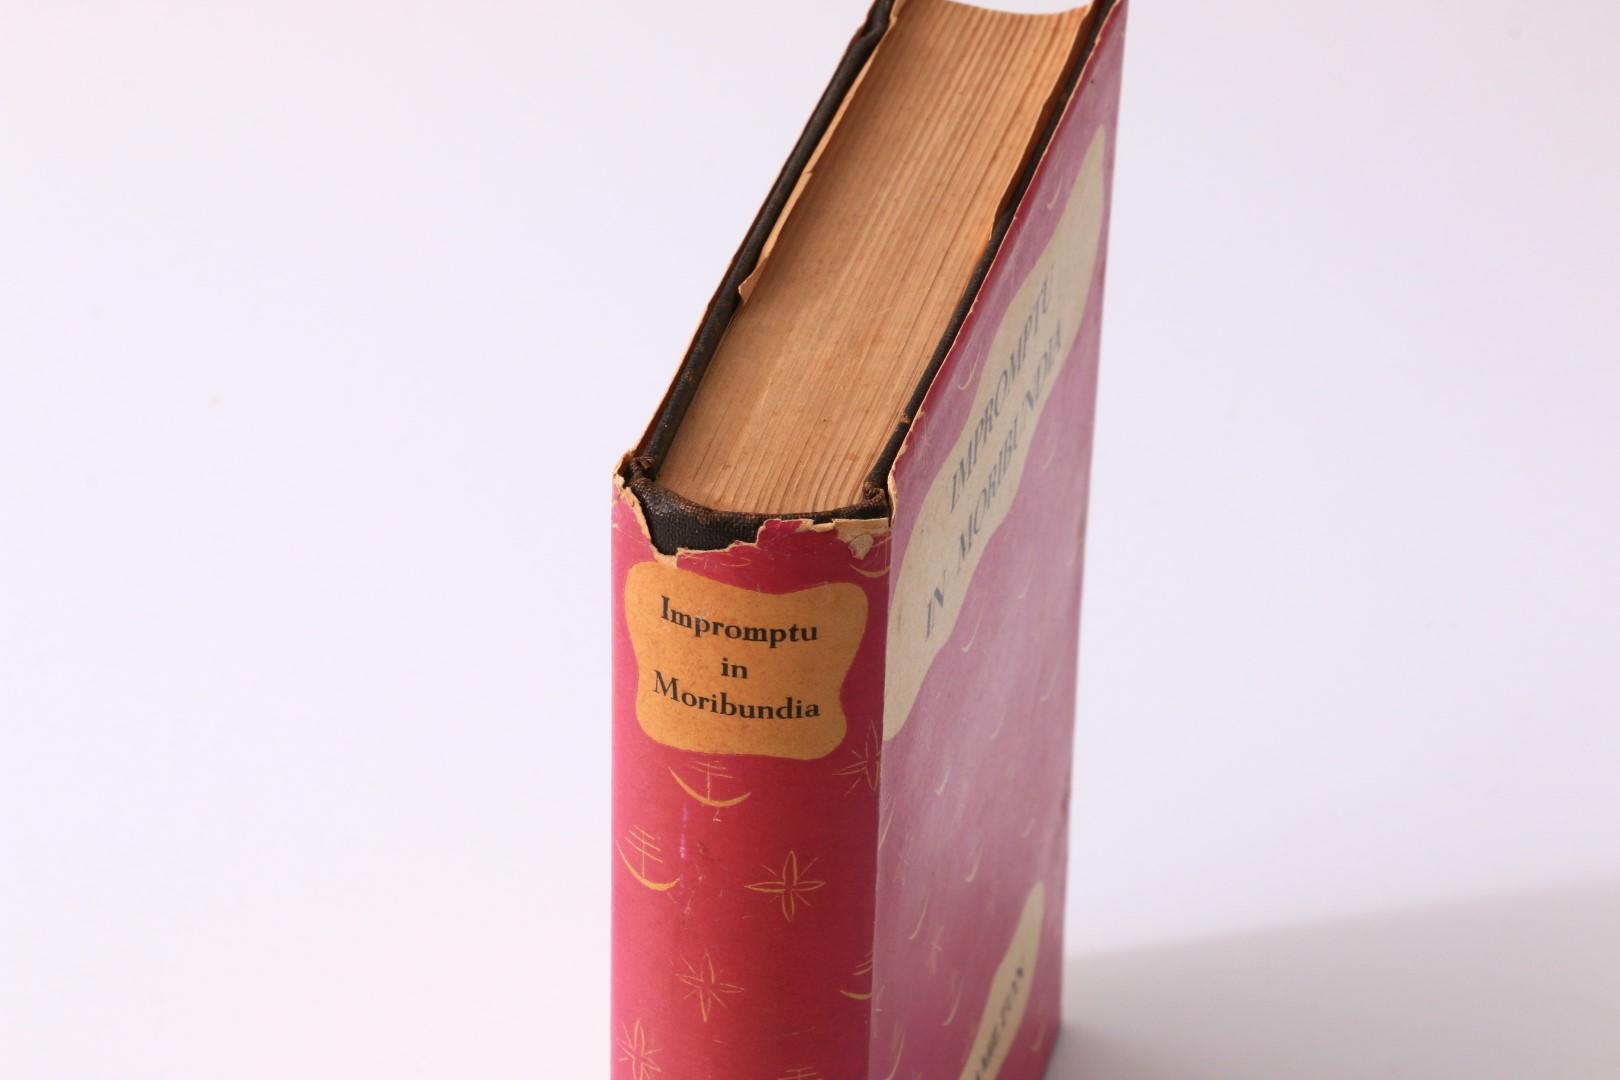 Patrick Hamilton - Impromptu in Moribundia - Constable, 1939, Signed First Edition.